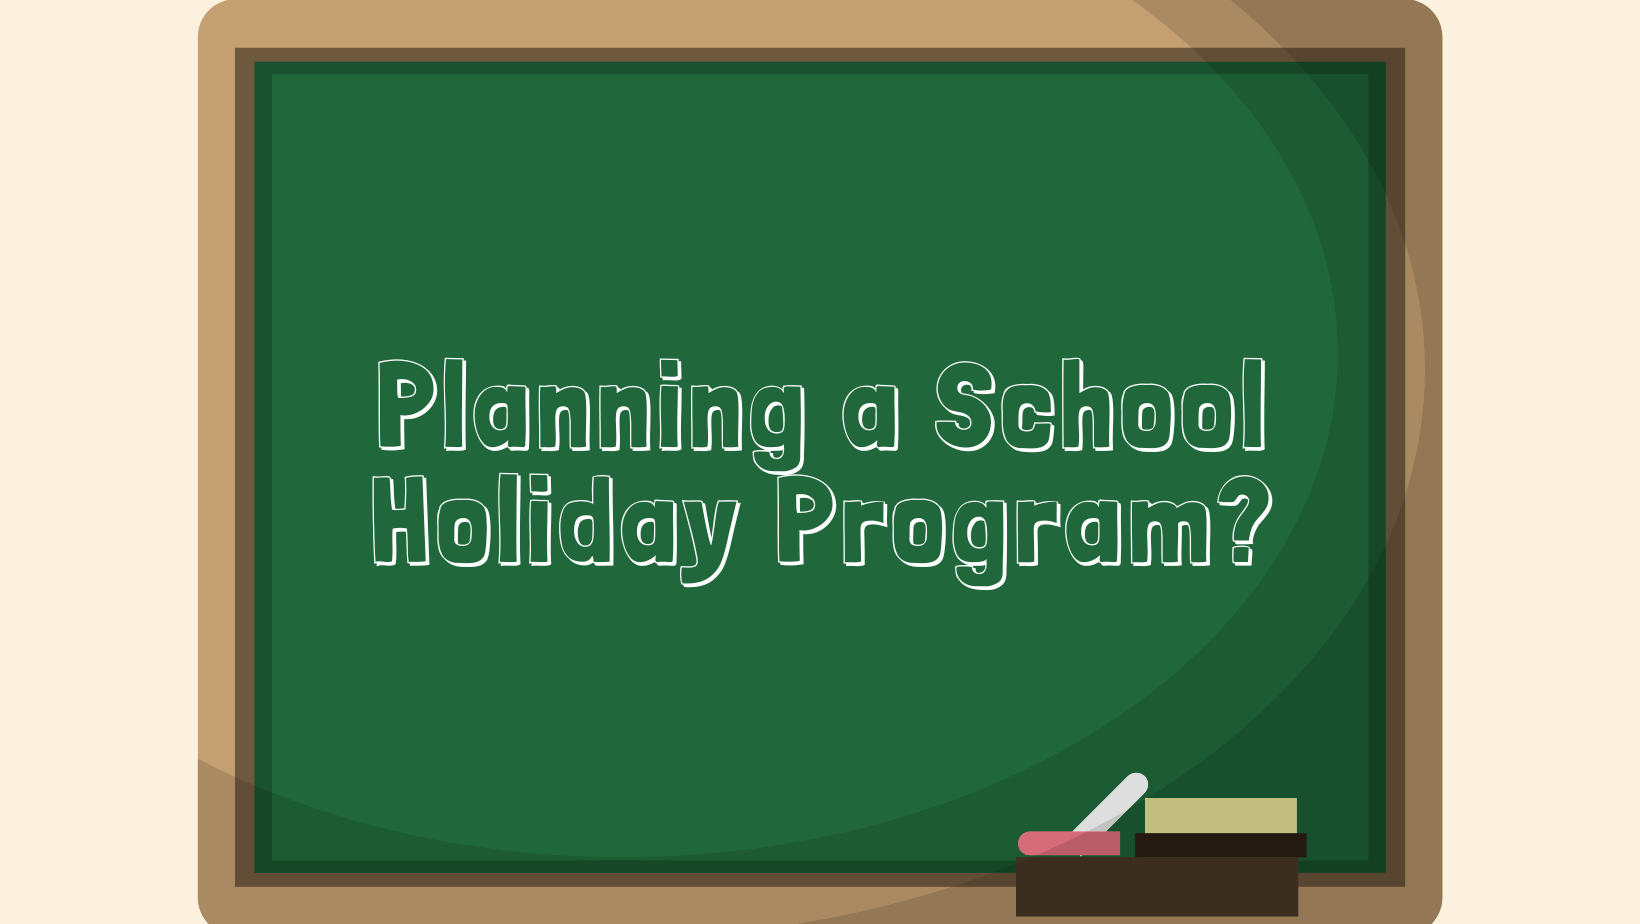 School Holiday Program Flyer: Get Your Activity Featured